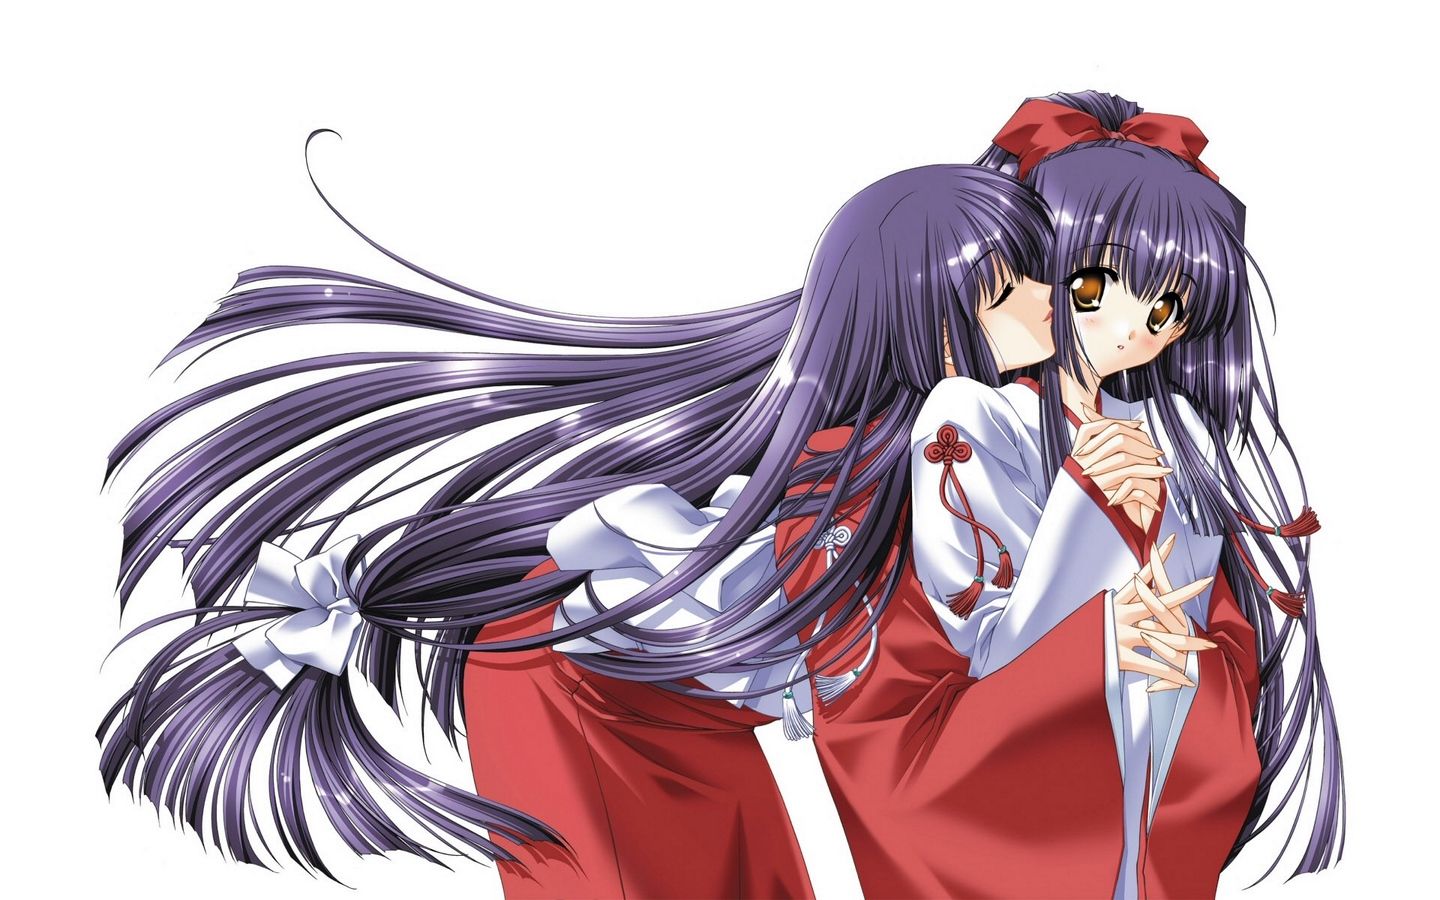 Anime girls kiss wallpaper, 2538x2000, 780361